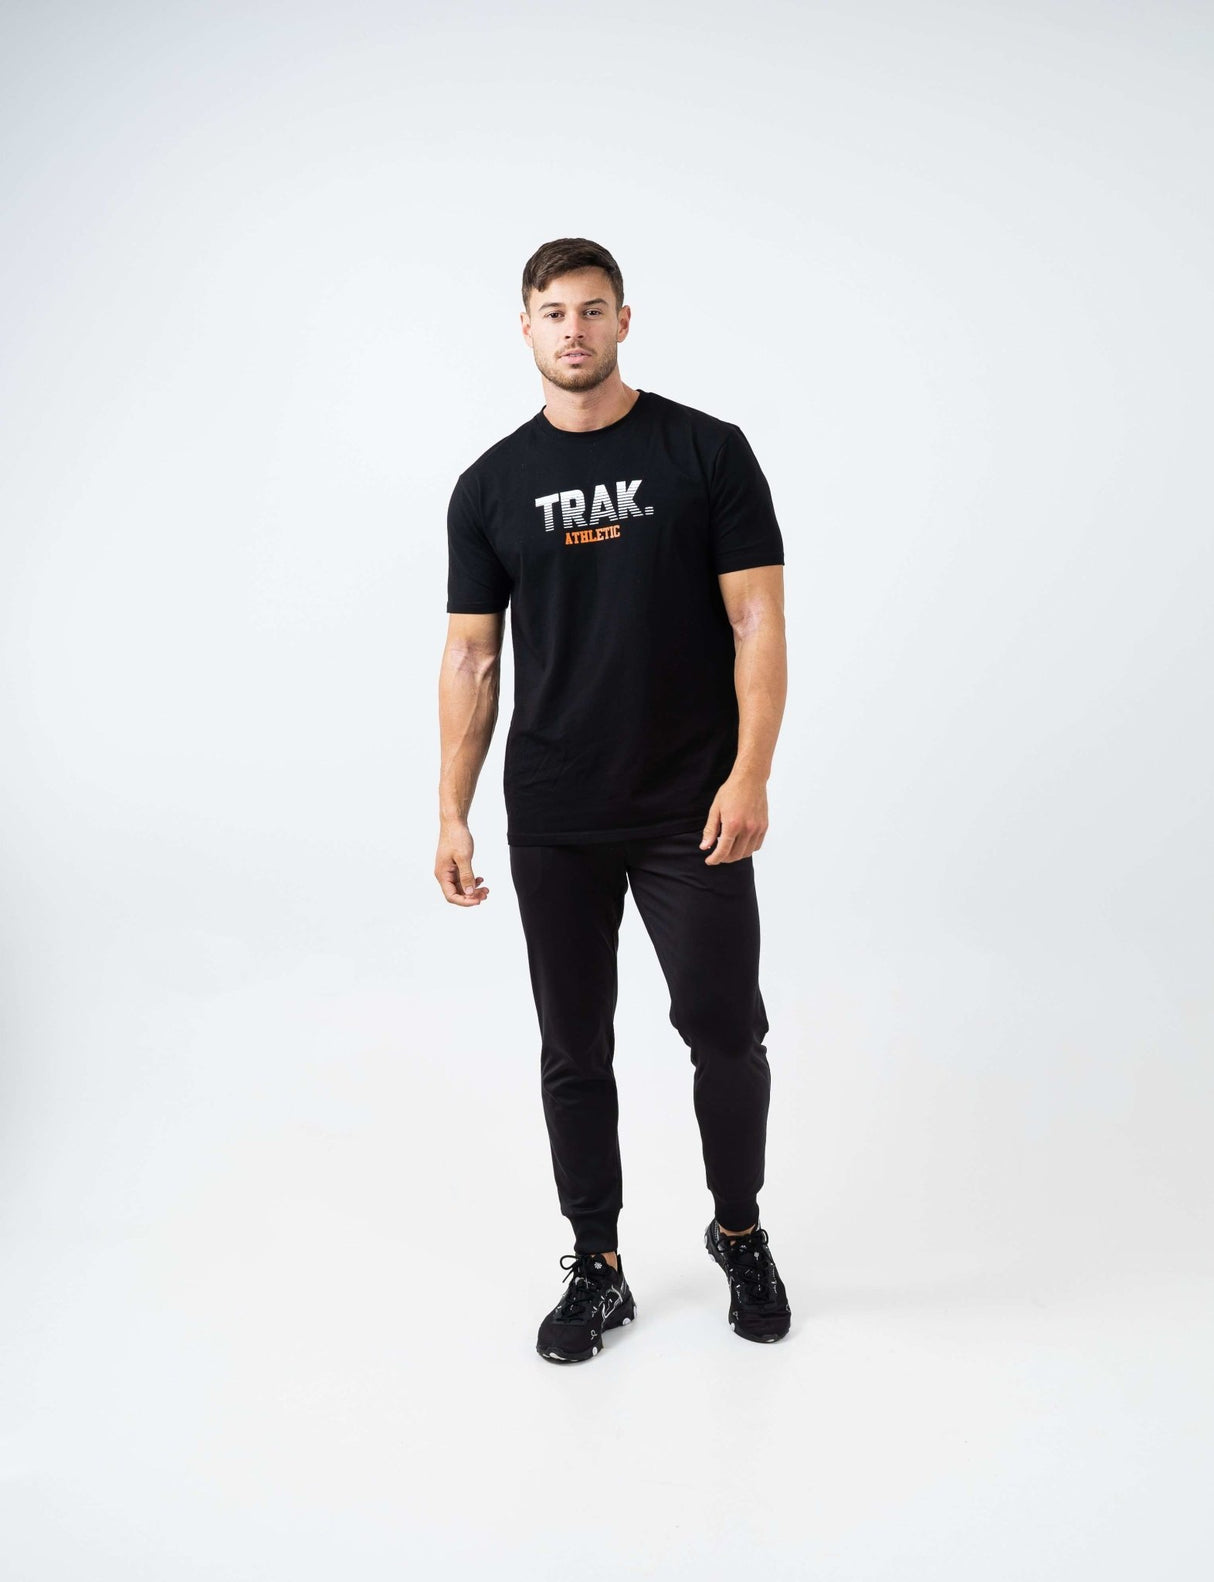 Back Logo Trak T-Shirt |T-Shirt | Trak Athletic | Absolute Rugby